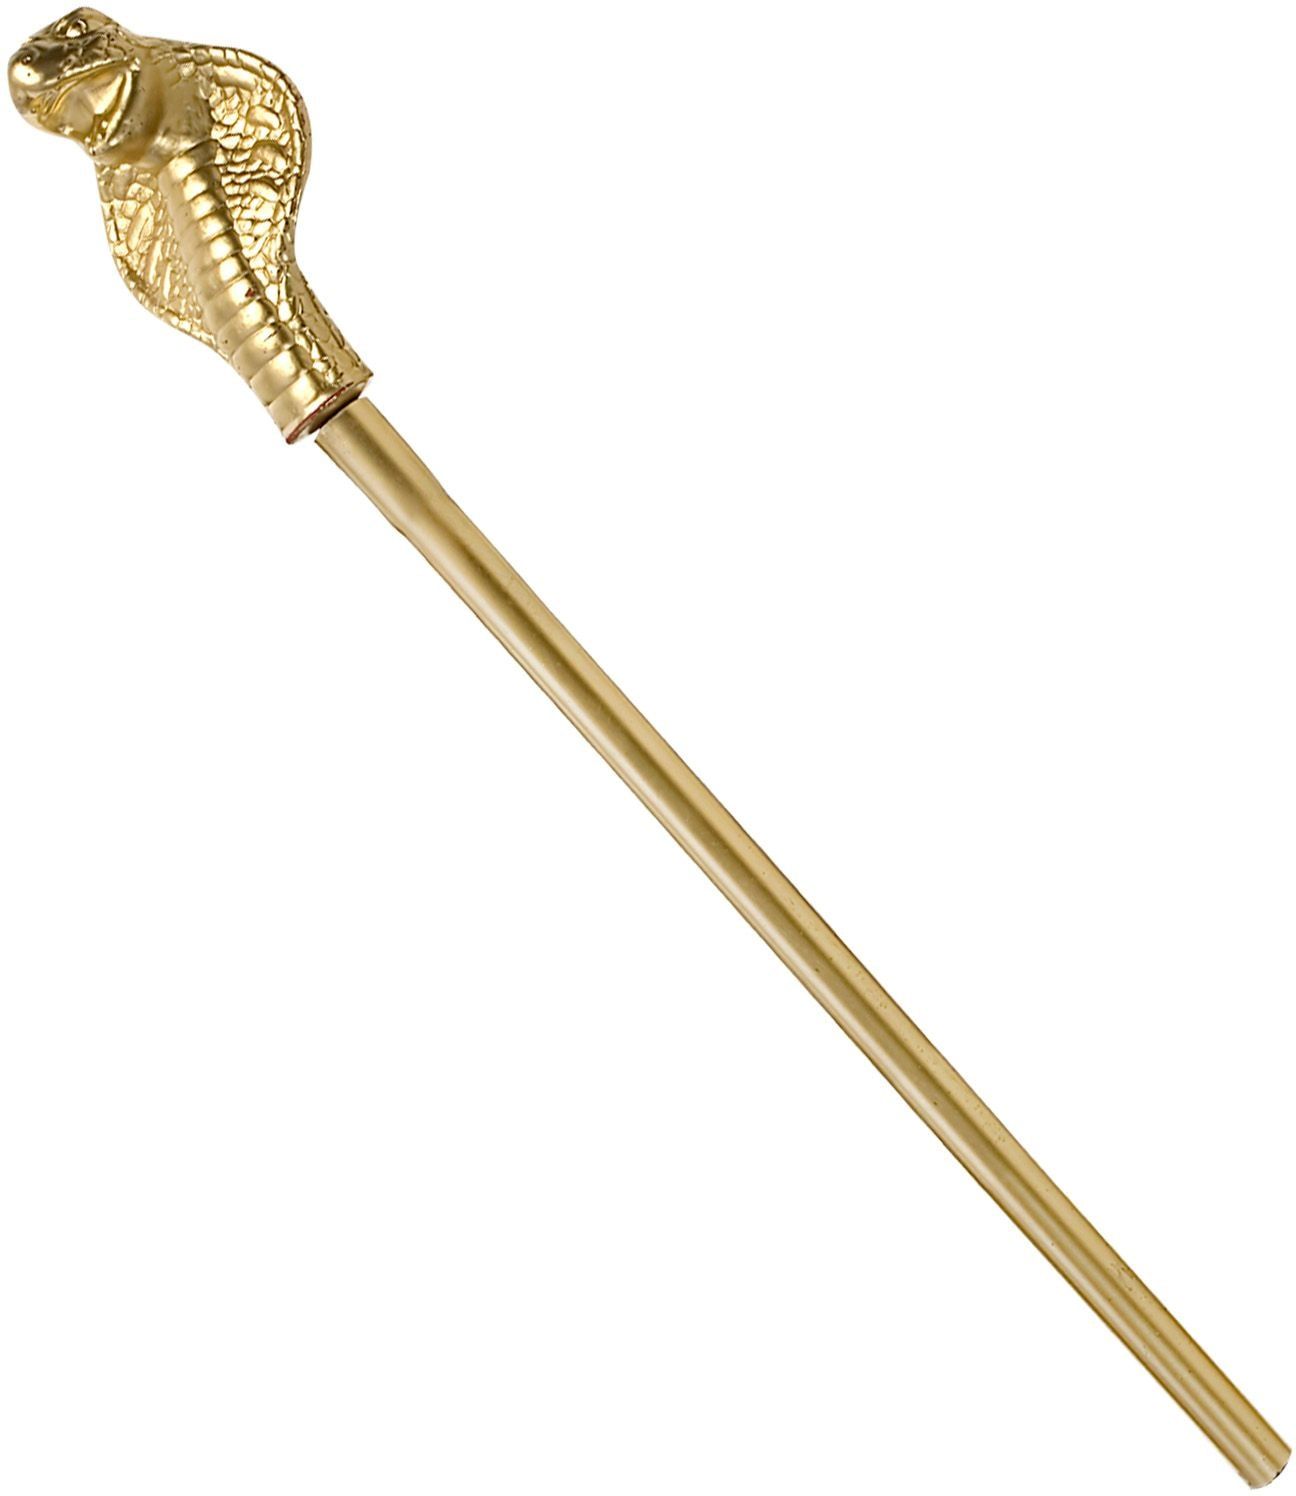 Farao scepter